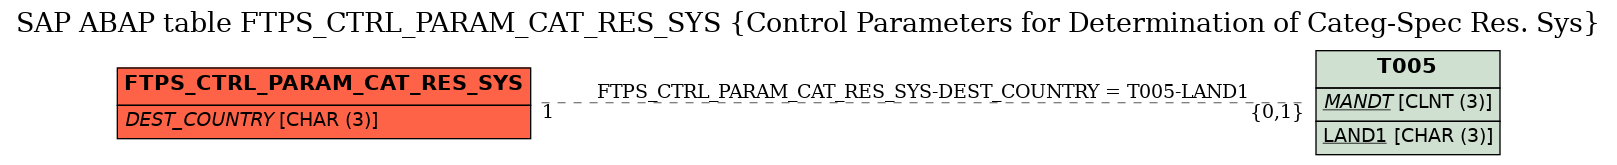 E-R Diagram for table FTPS_CTRL_PARAM_CAT_RES_SYS (Control Parameters for Determination of Categ-Spec Res. Sys)